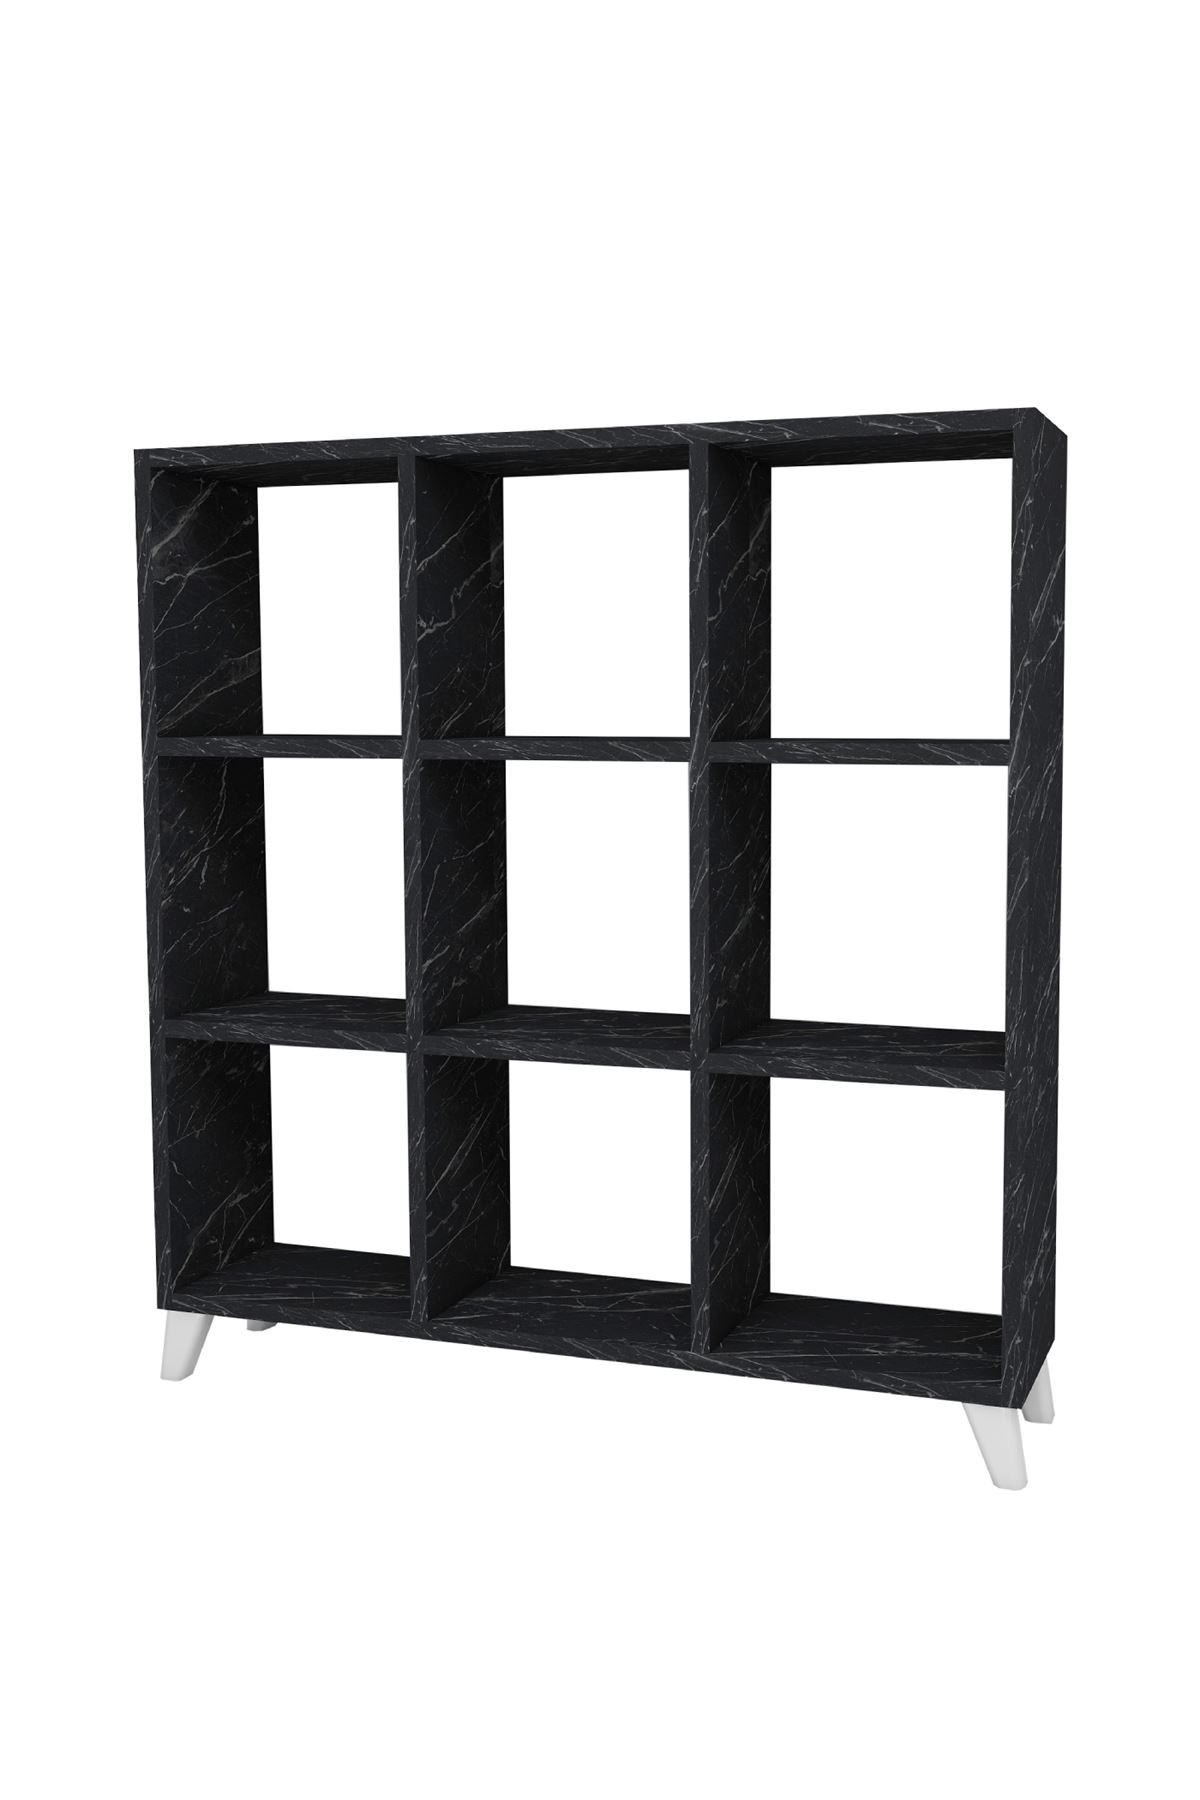 Bofigo Cube Bookshelf with 9 Sections and Shelves Square Bookcase Library Bendir